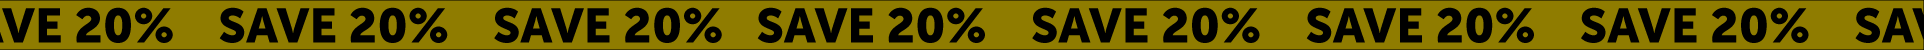 save 20 percent banner